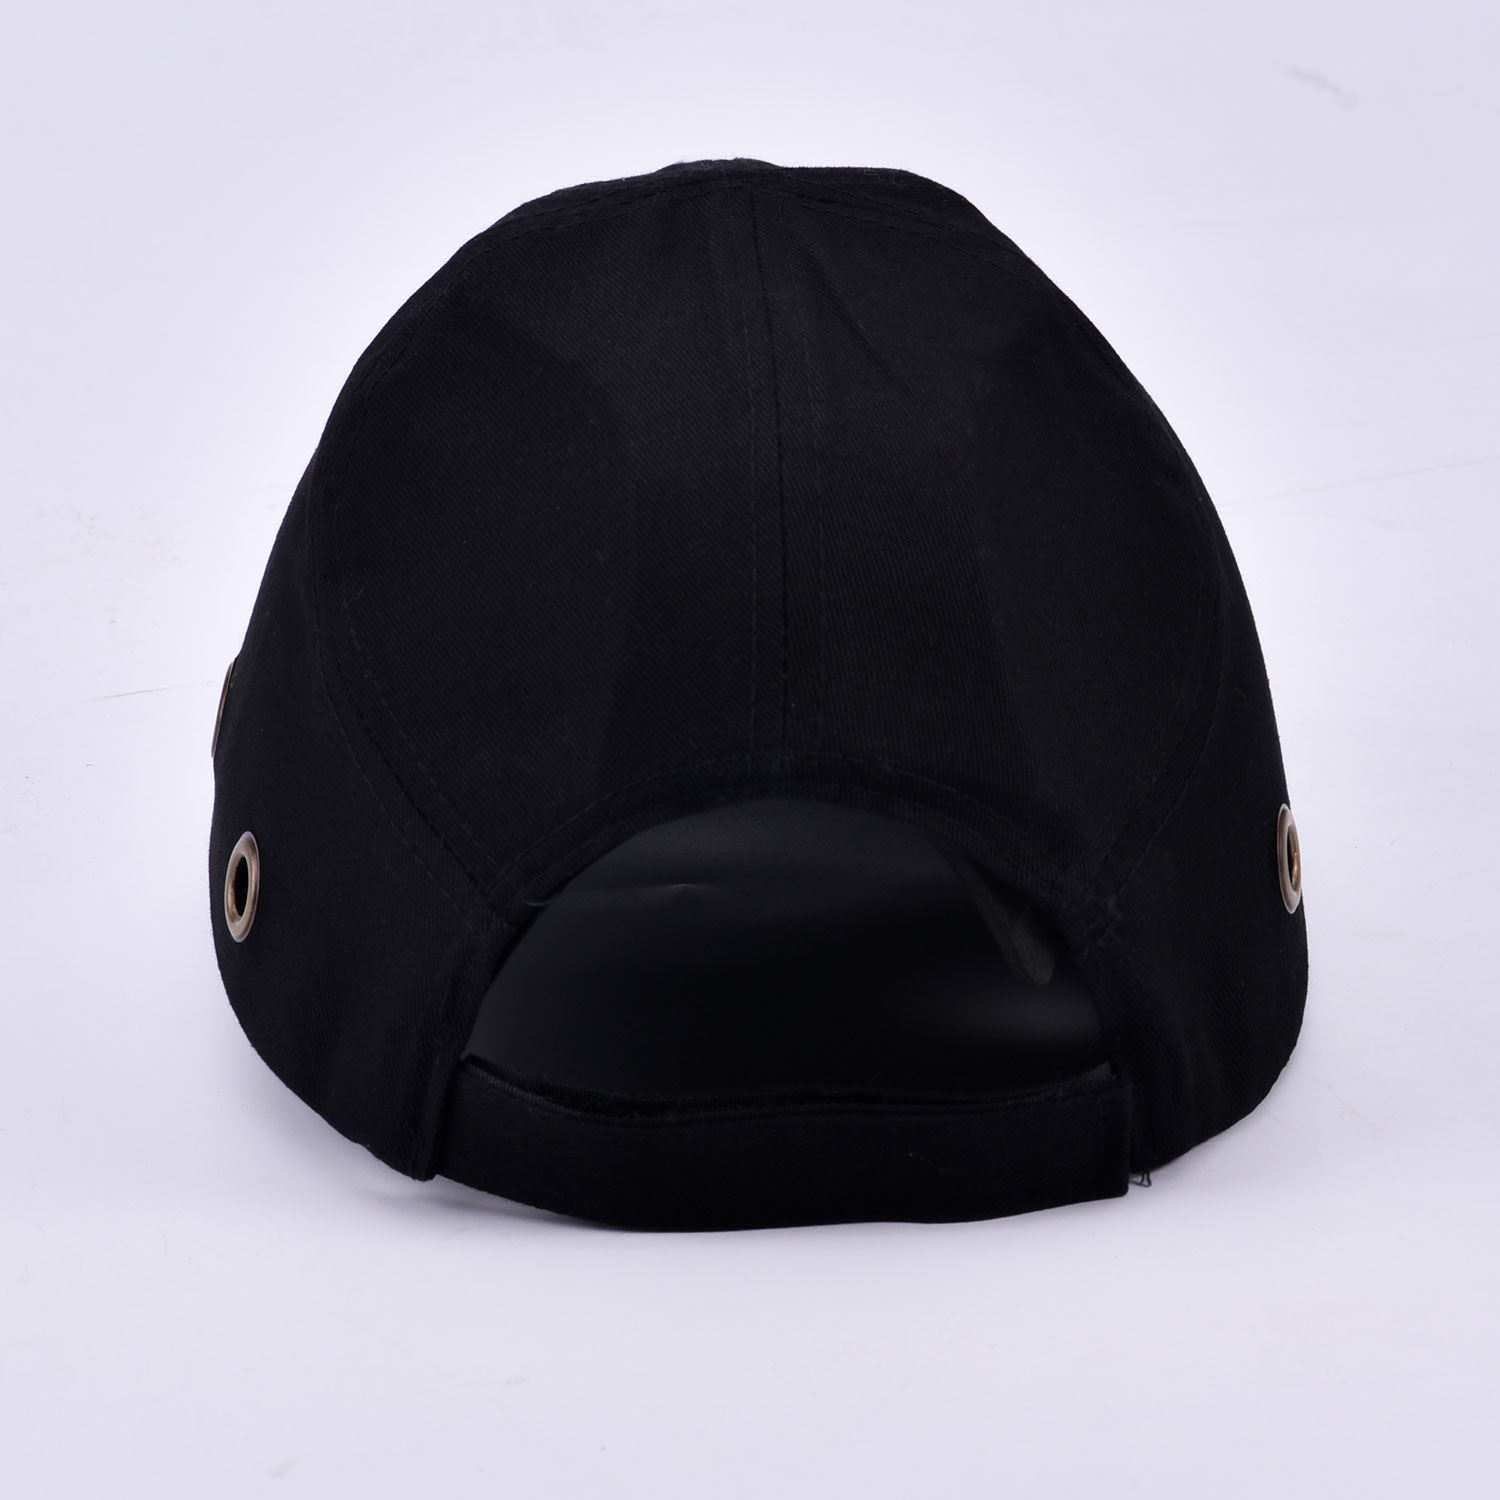 Бейсбольная защитная кепка WH001 Black